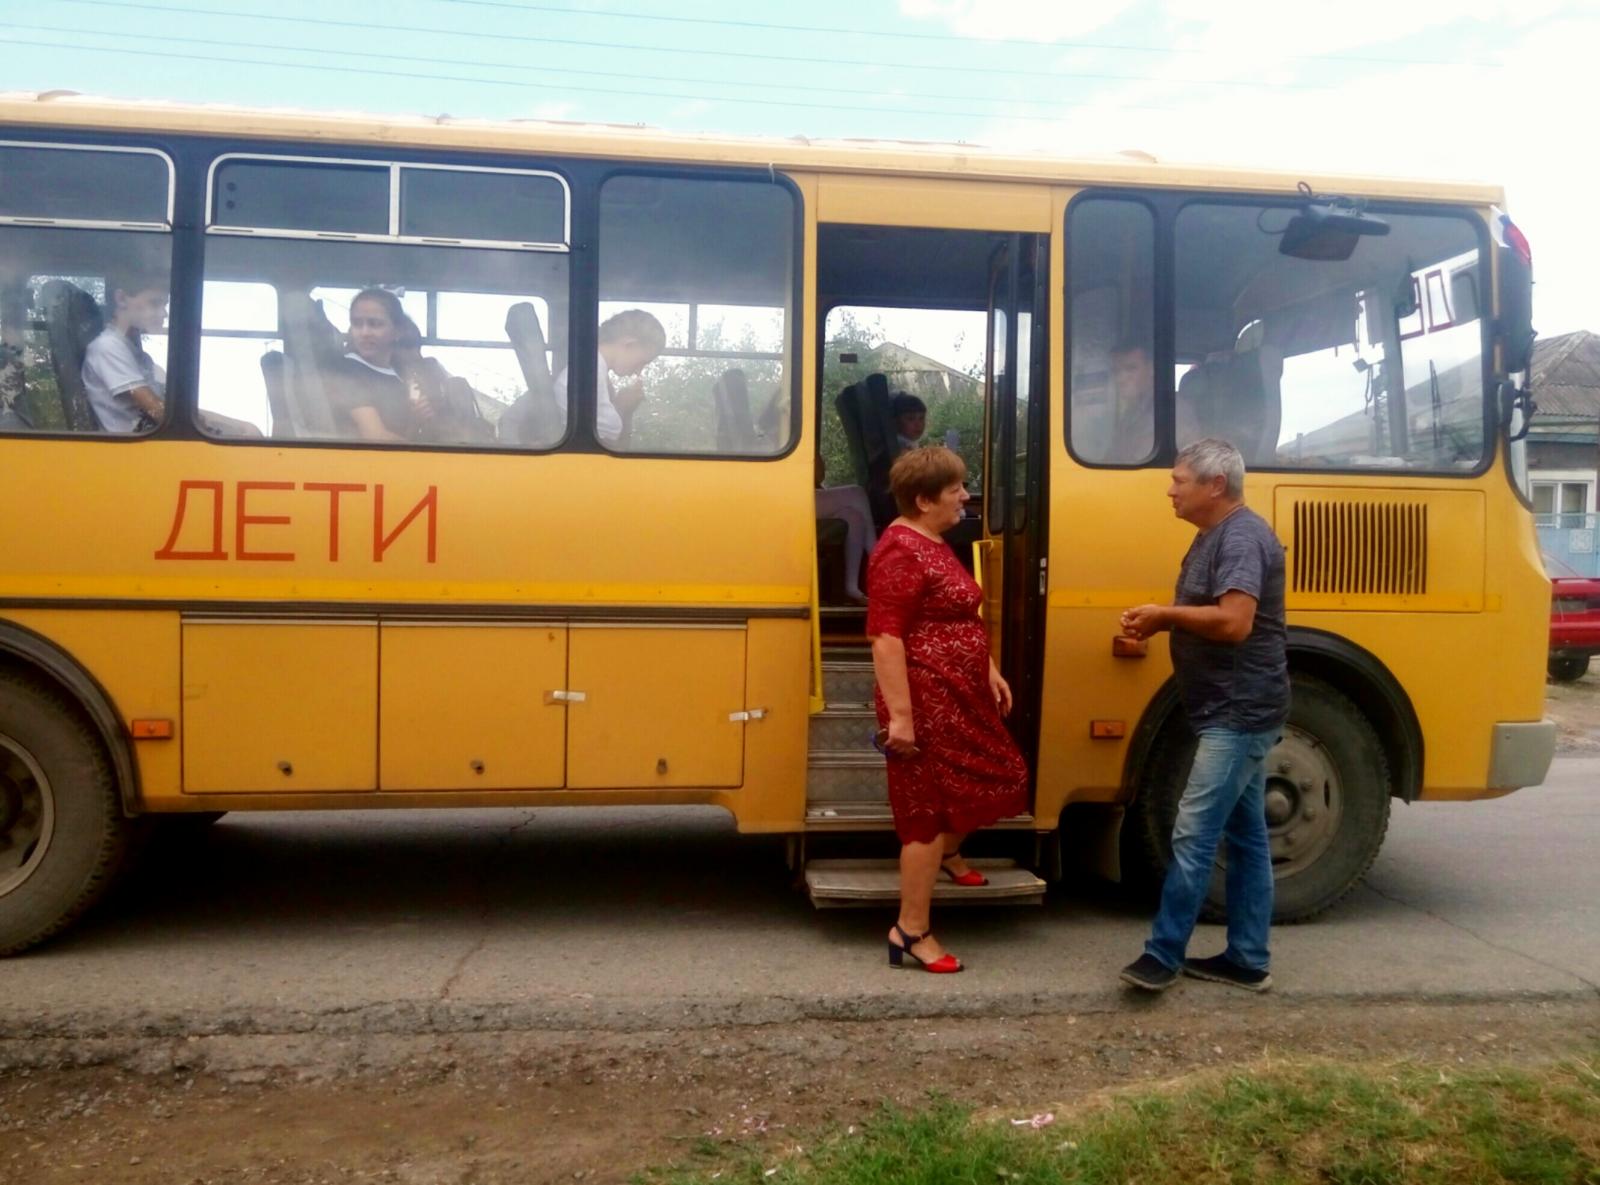 Желтые автобусы дети. Школьный автобус. Автобус для детей. Автобус для перевозки детей. Школьный автобус дети.